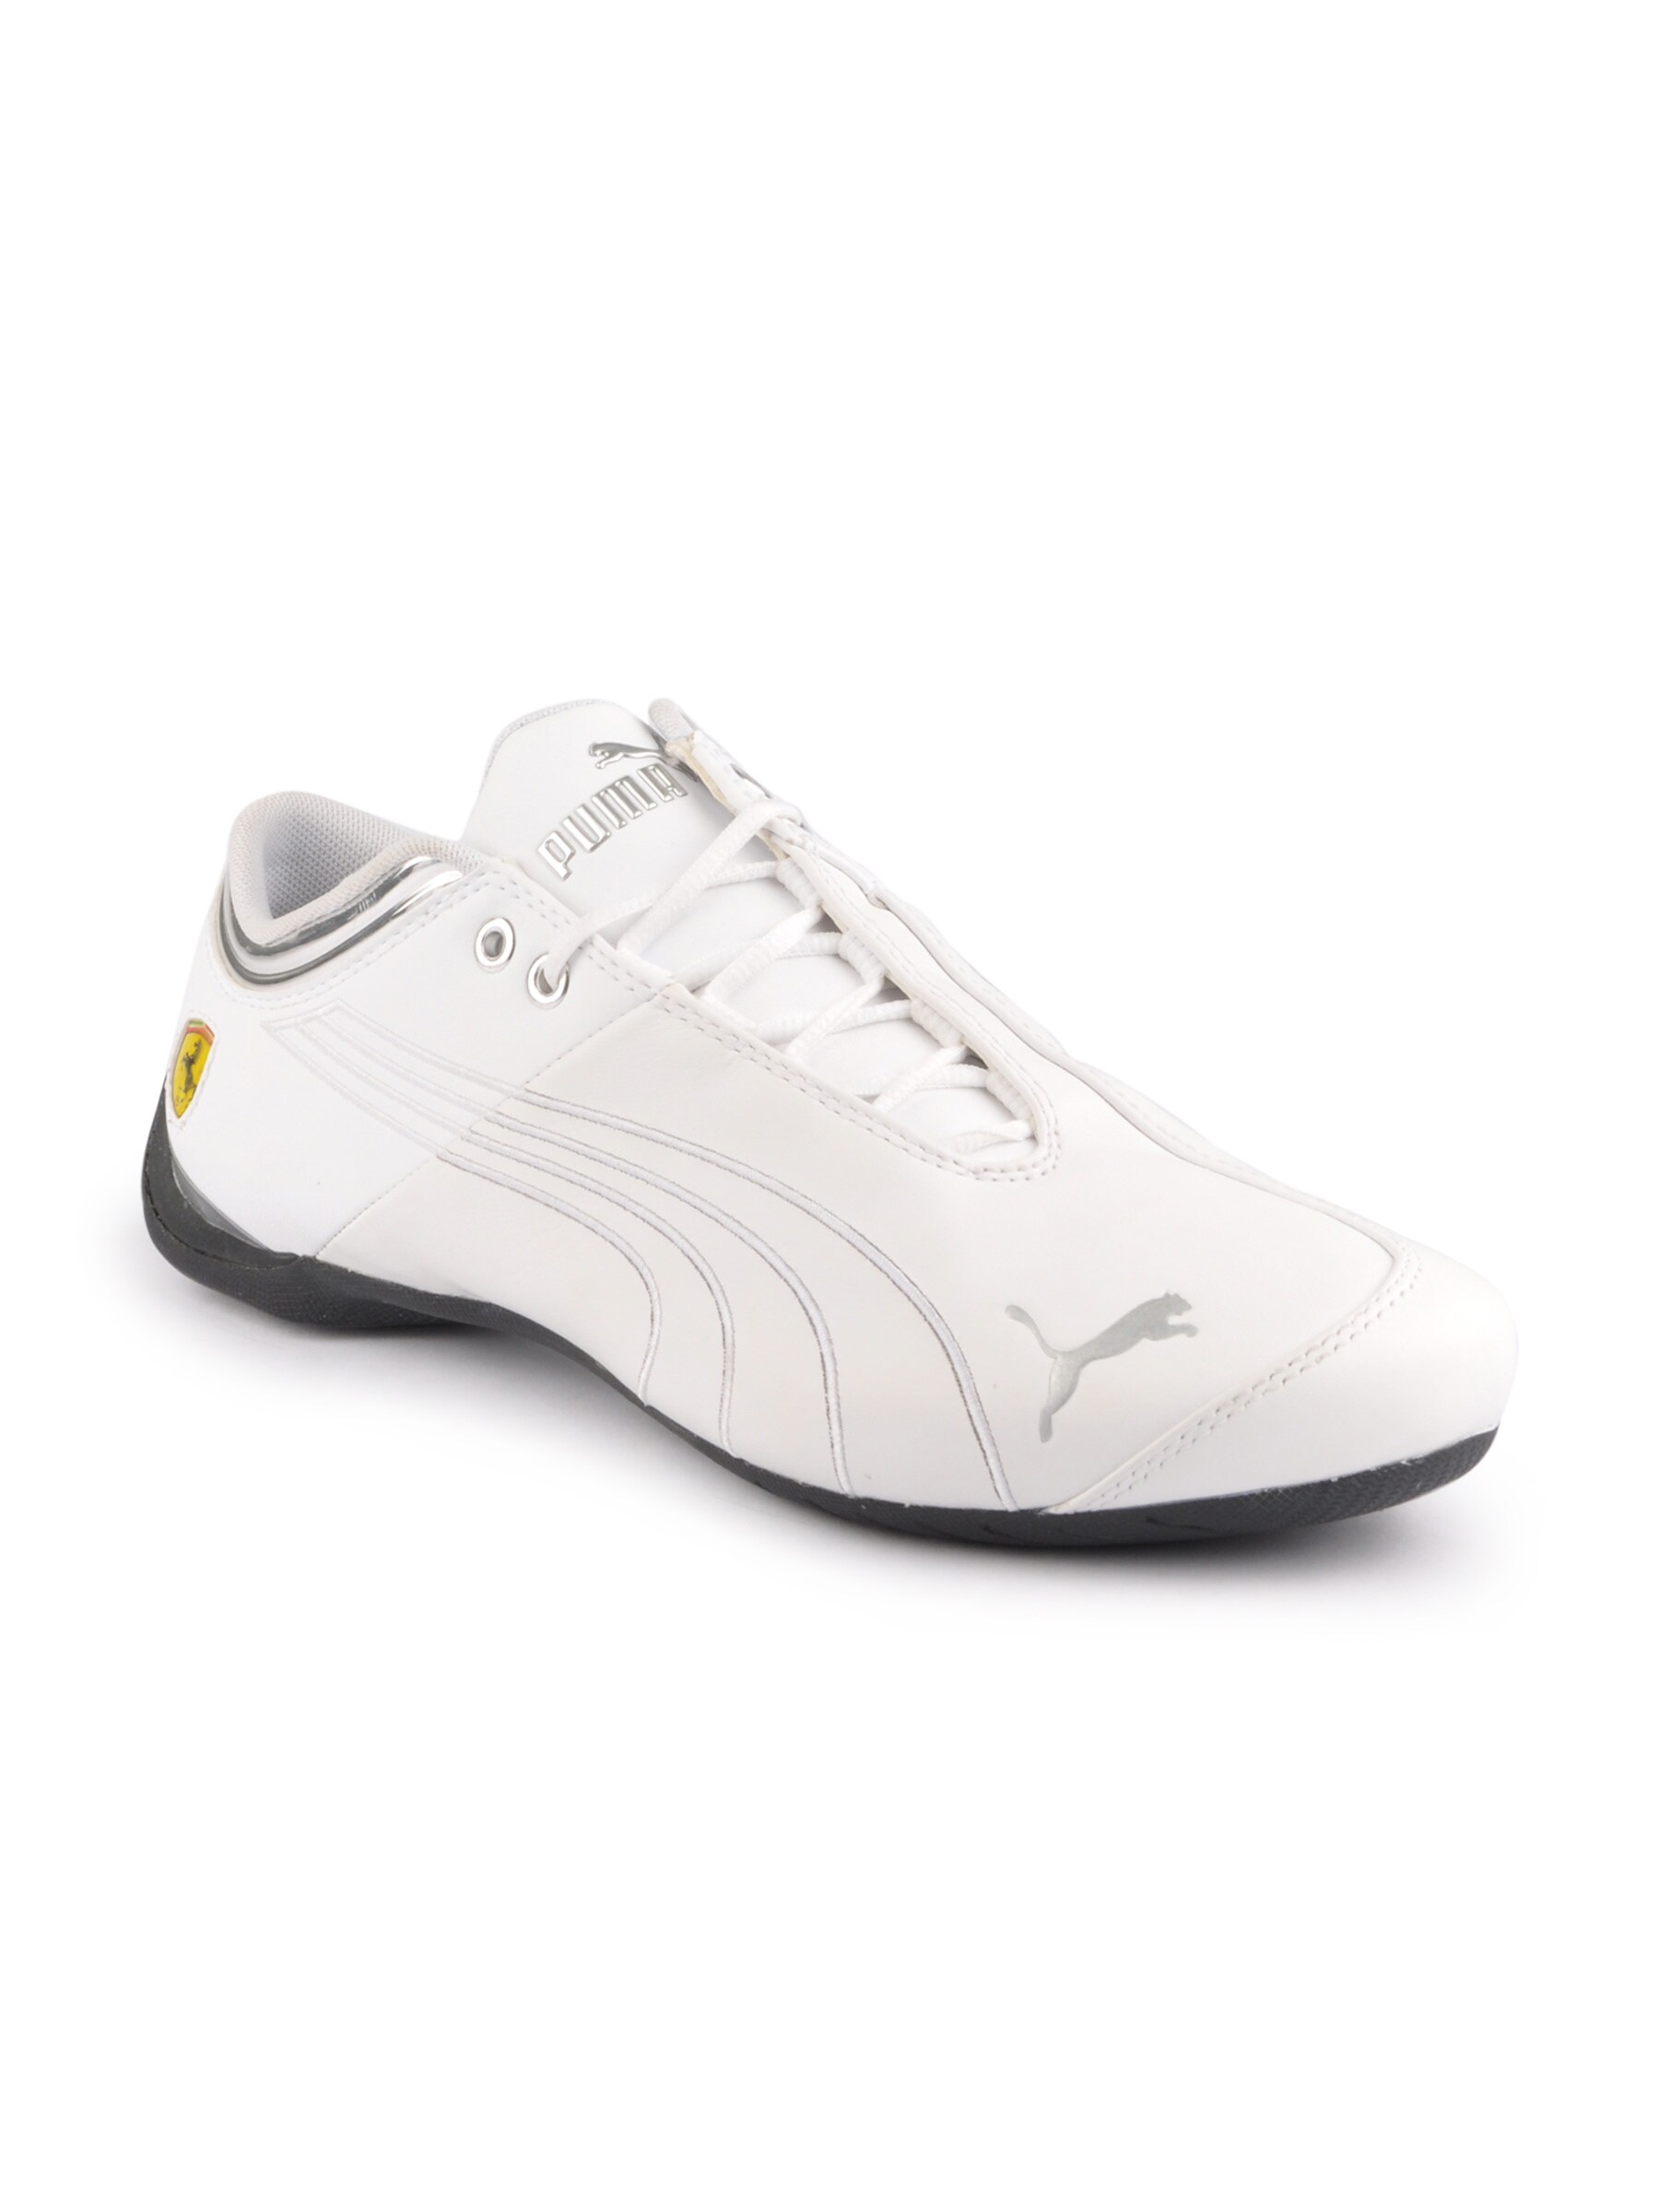 Puma Men Furure Cat White Sports Shoes